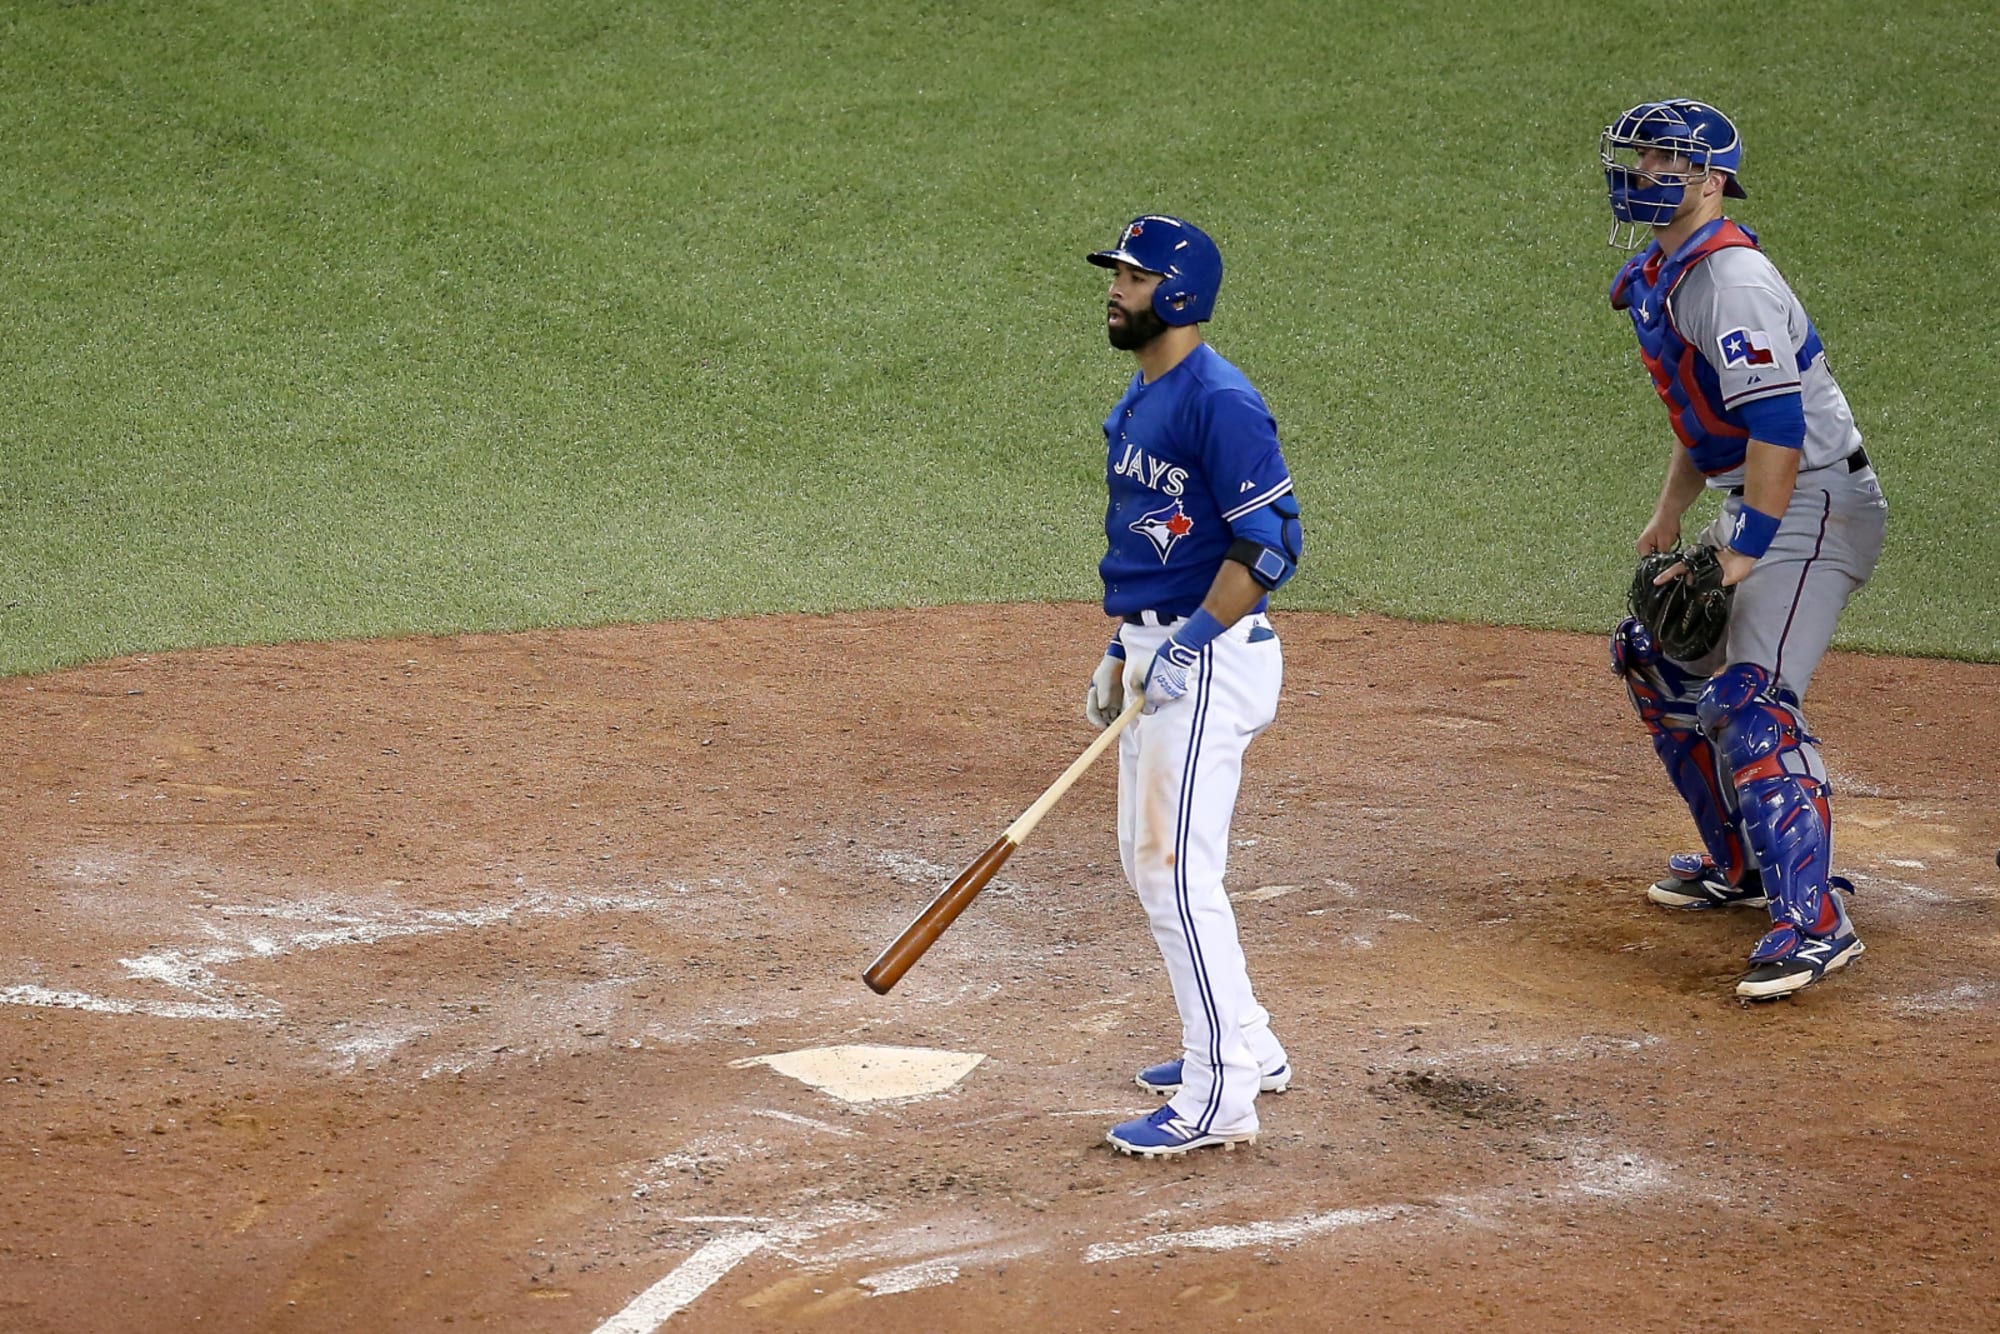 Toronto Blue Jays: Jose Bautista bat flip remains an iconic moment